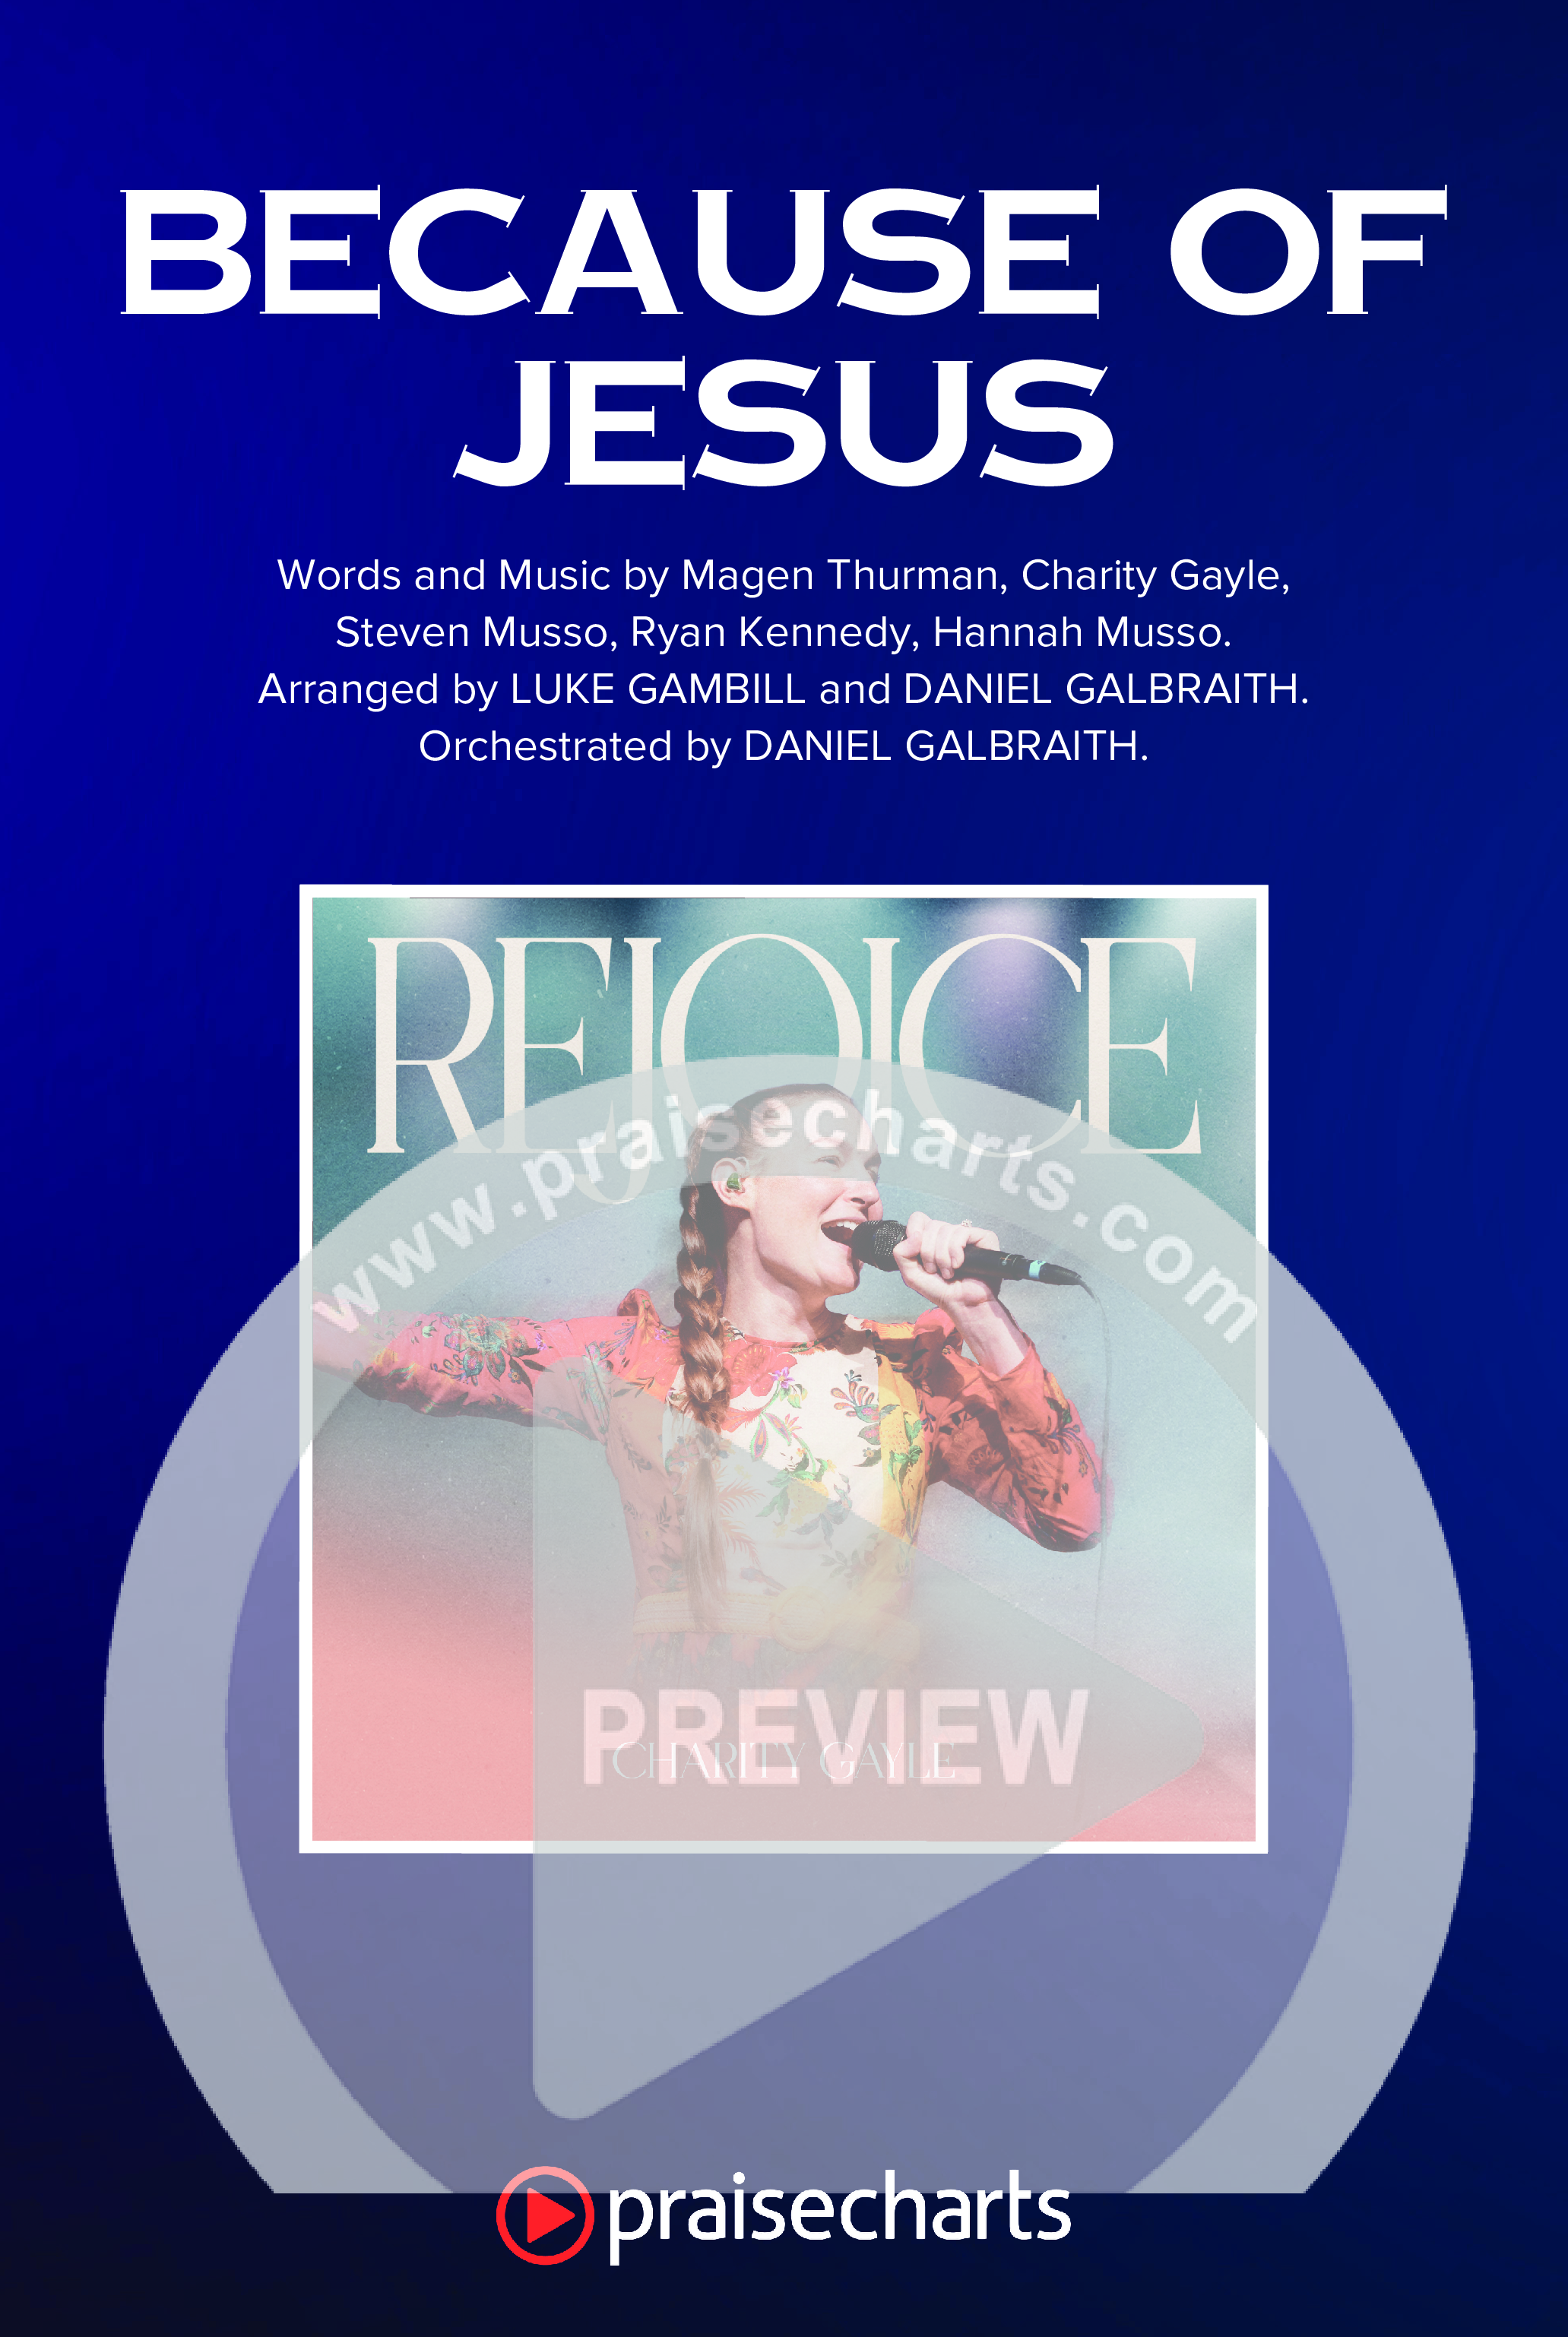 Because Of Jesus (Worship Choir/SAB) Octavo Cover Sheet (Charity Gayle / Arr. Luke Gambill)